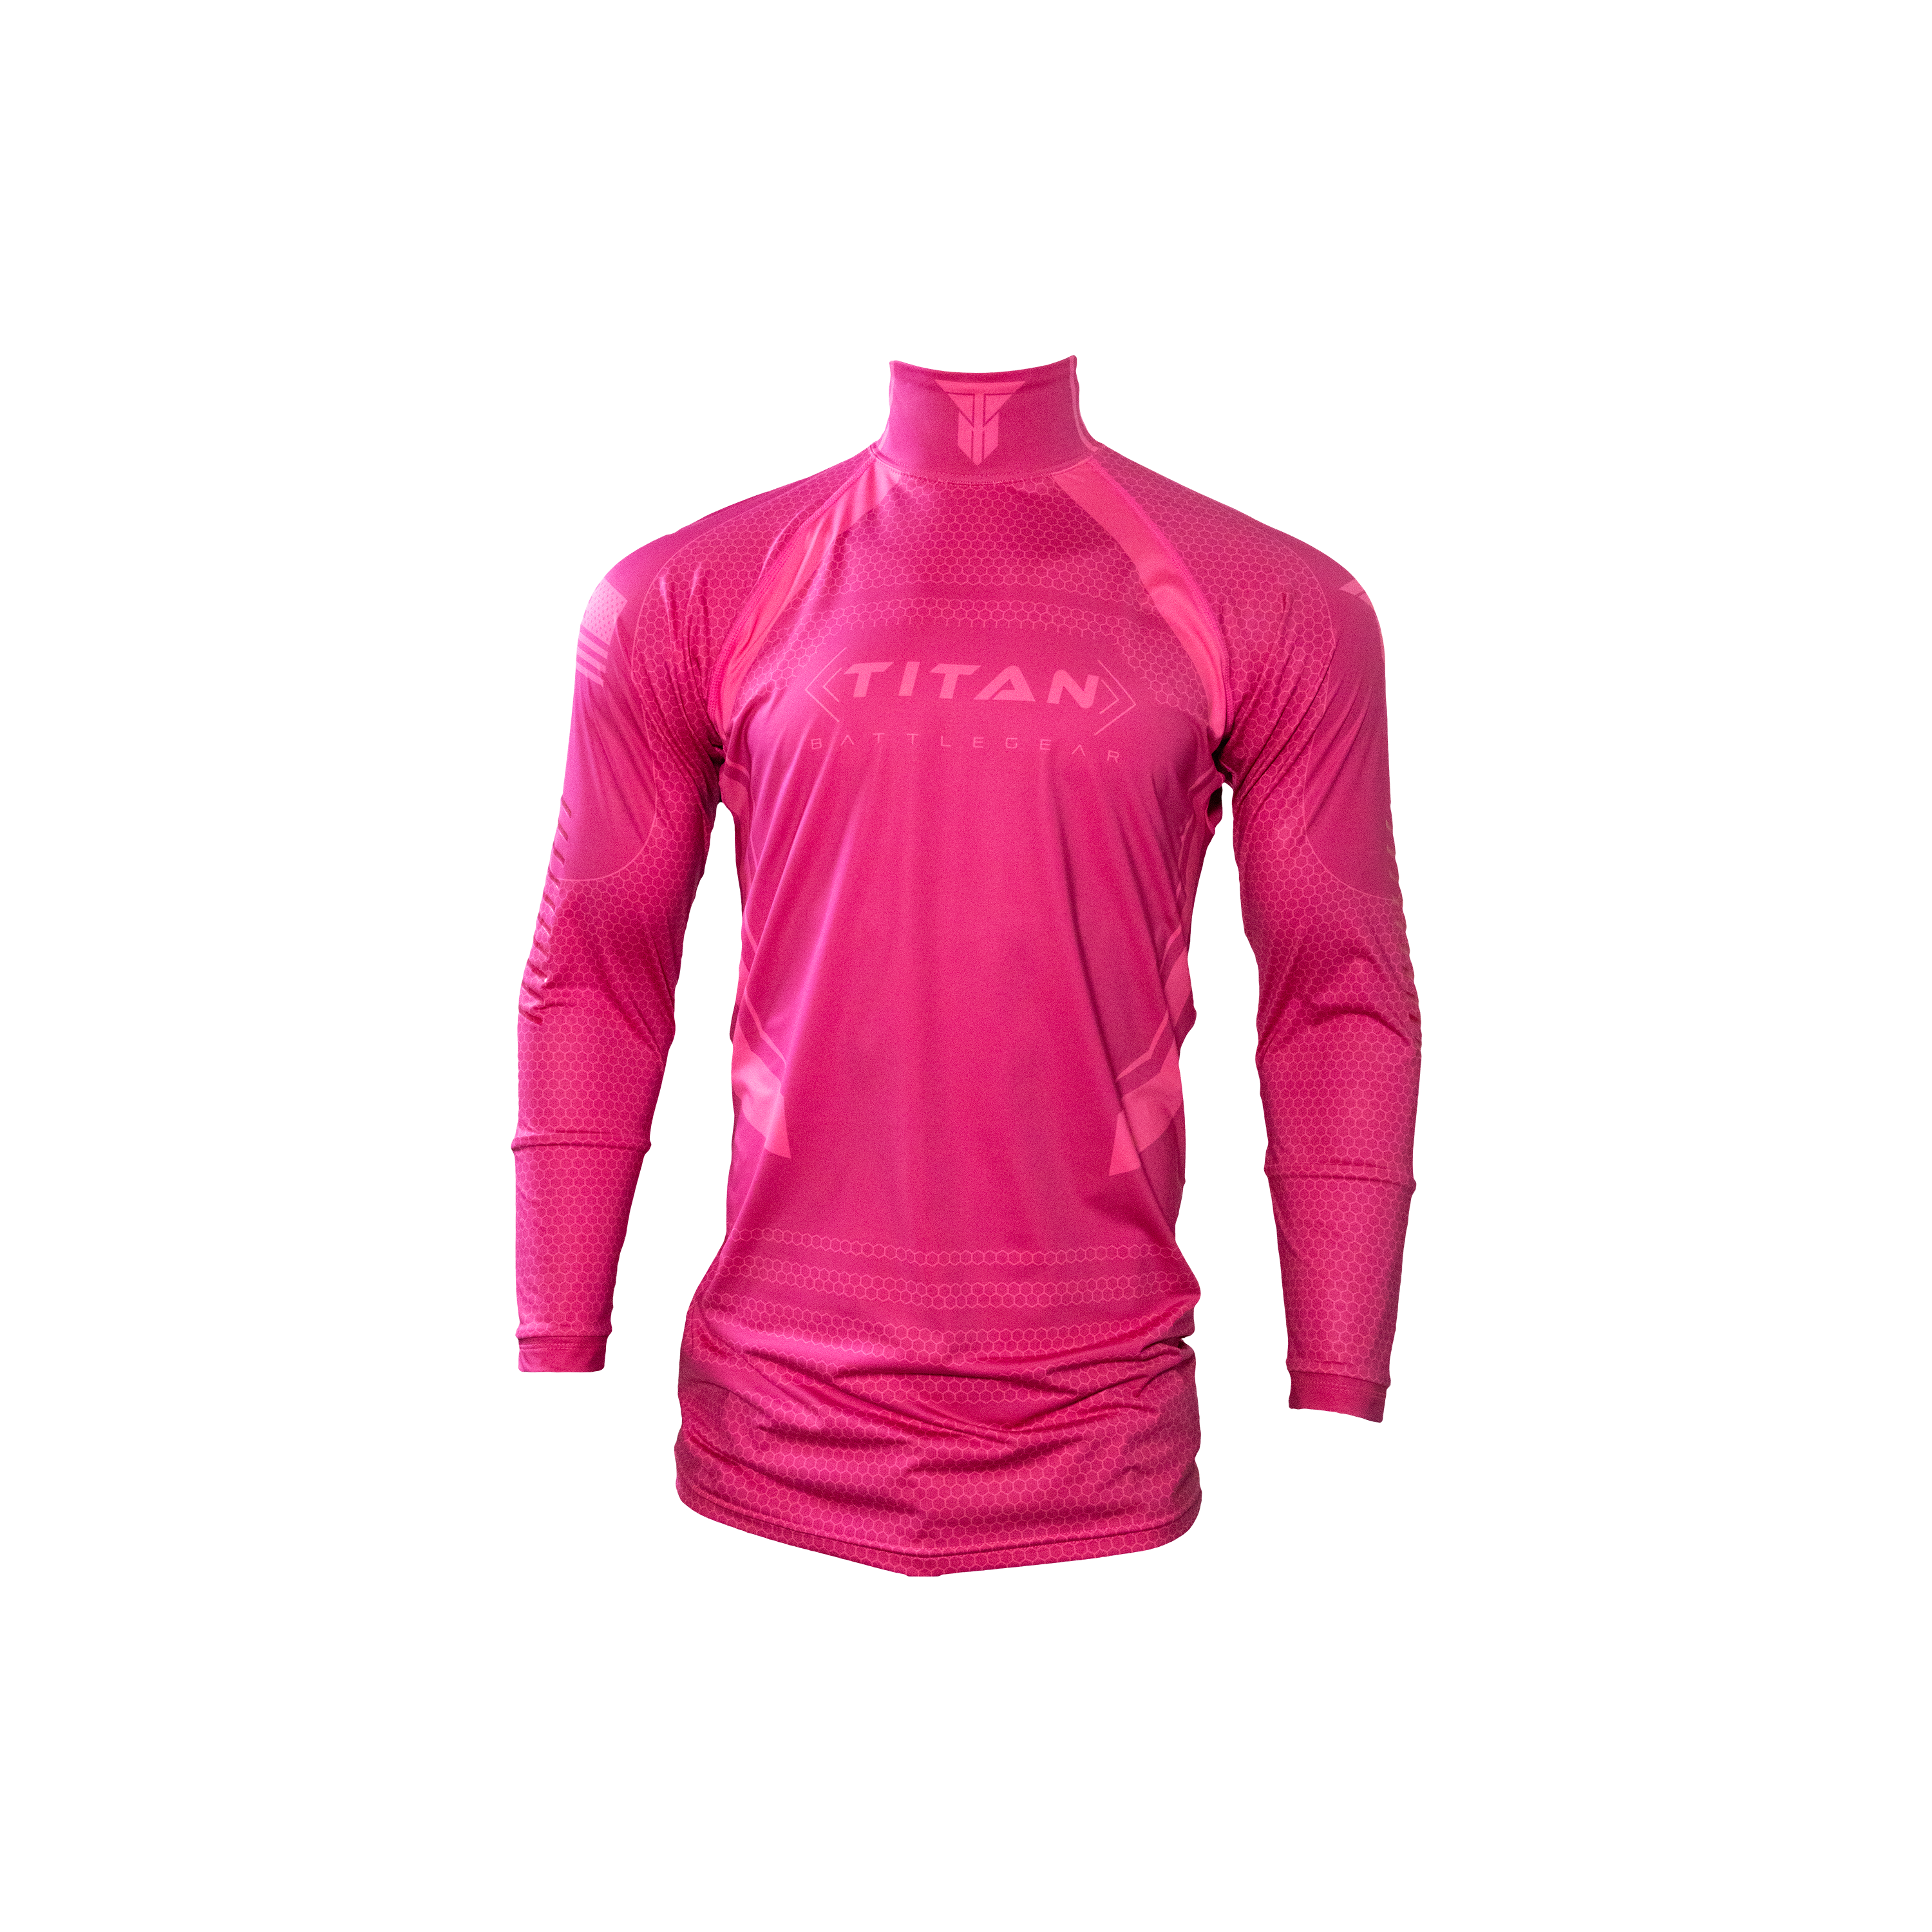 front mockup of Titan Battlegear hockey neck guard shirt in pink